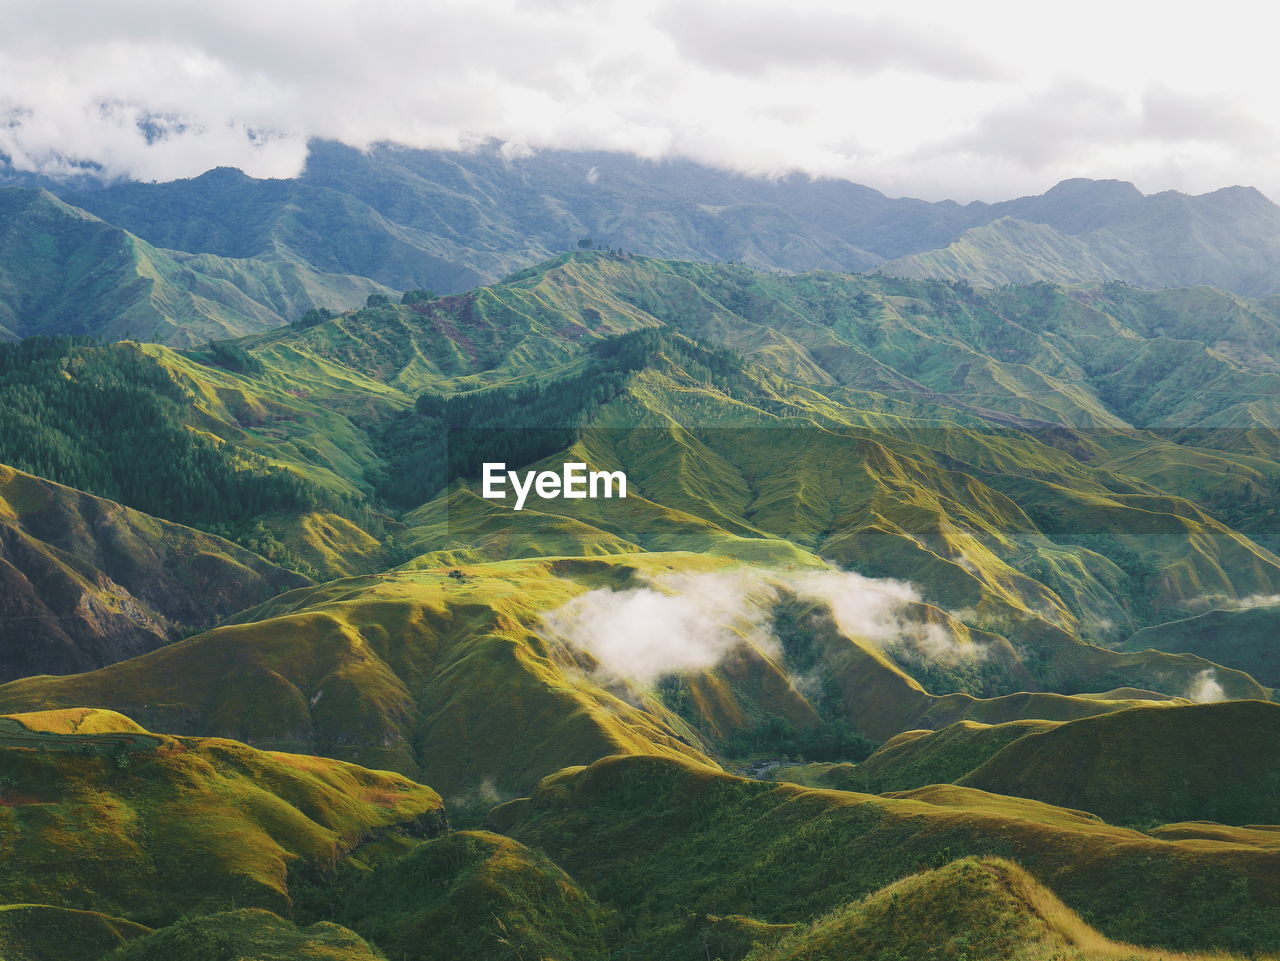 One of the most beautiful scenery i've seen so far - panimahawa ridge located at bukidnon, philippin